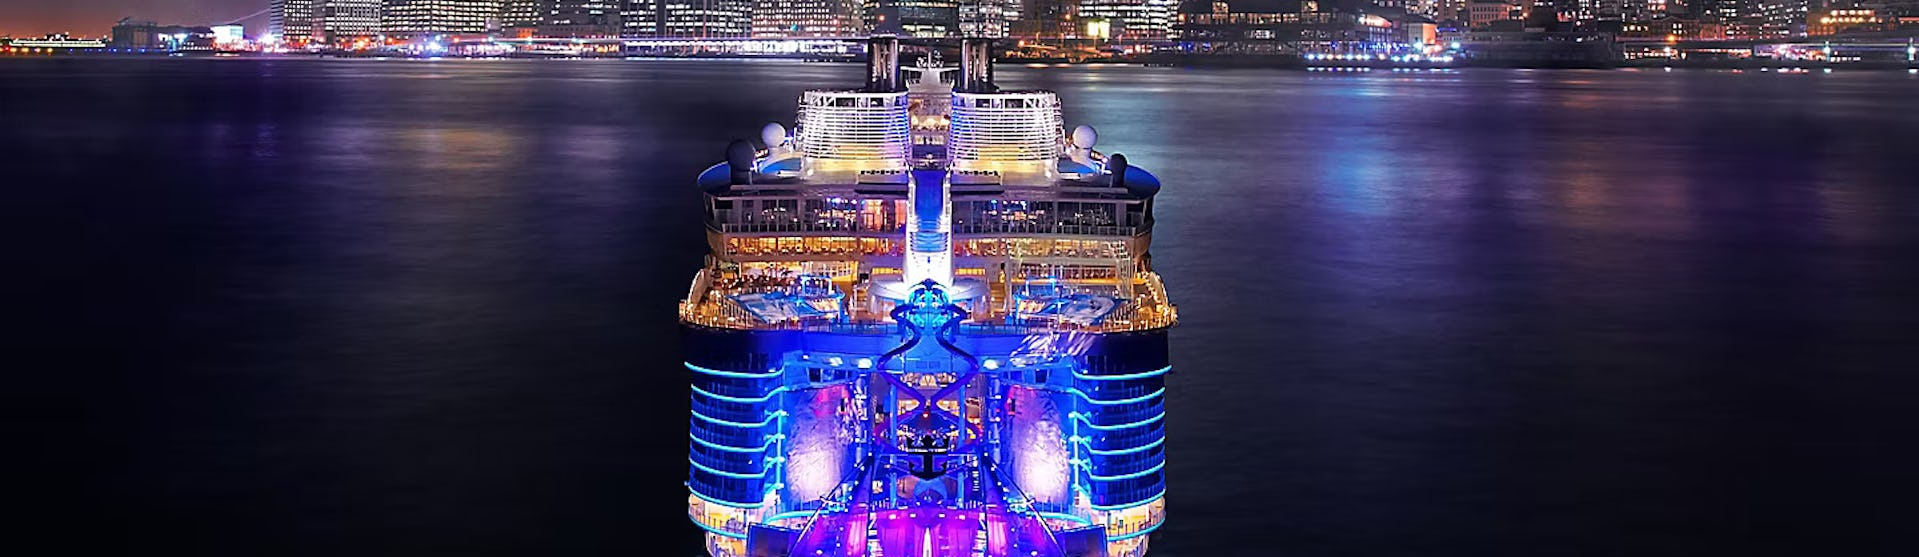 Symphony of the Seas New York Skyline Ship